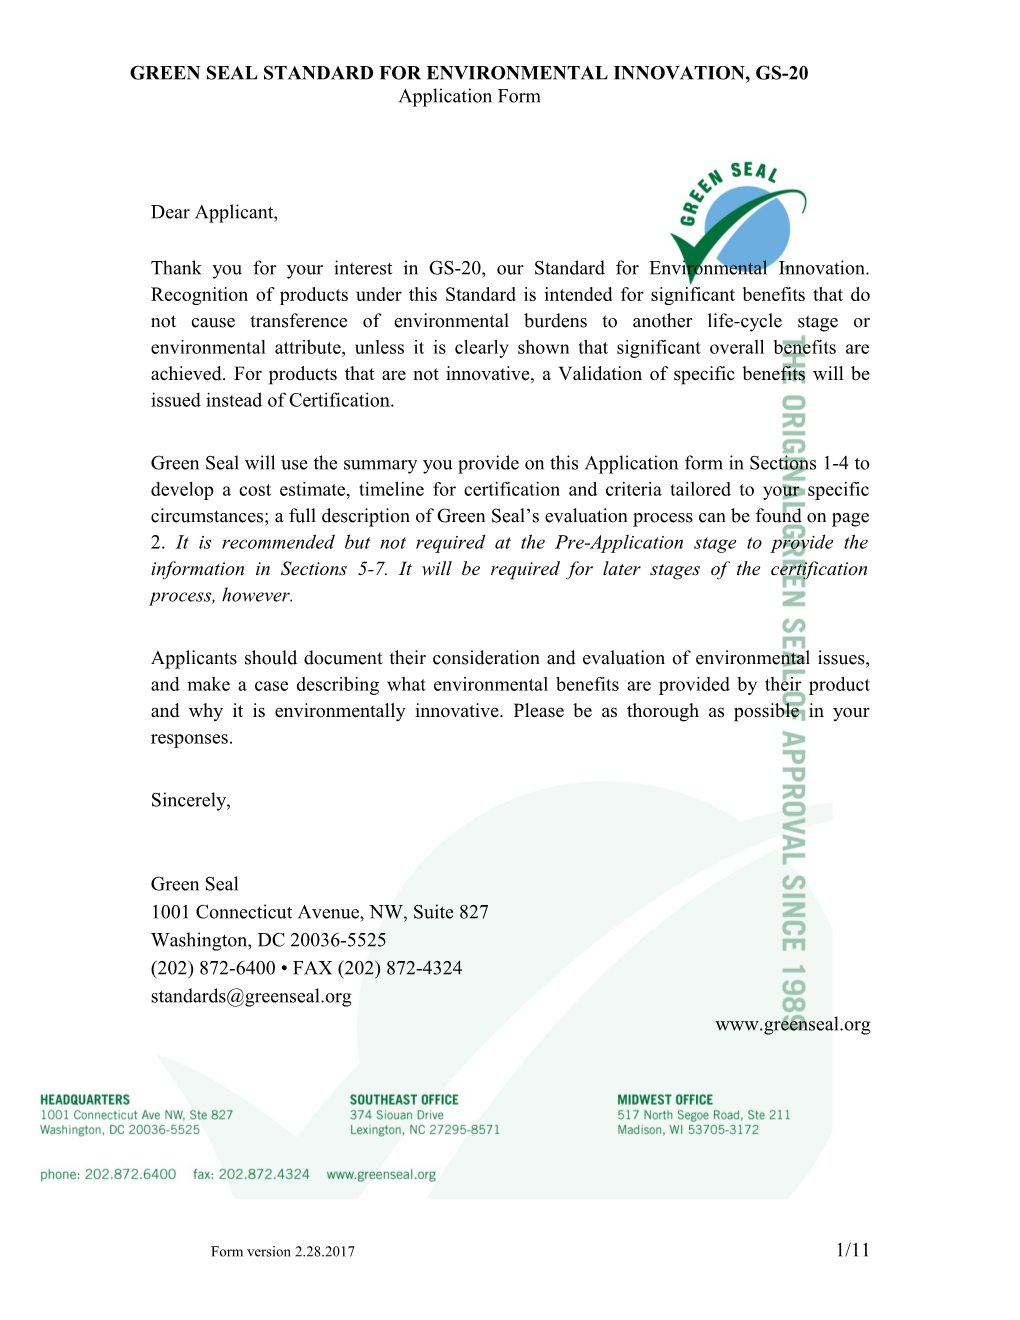 Green Seal Standard for Environmental Innovation, Gs-20